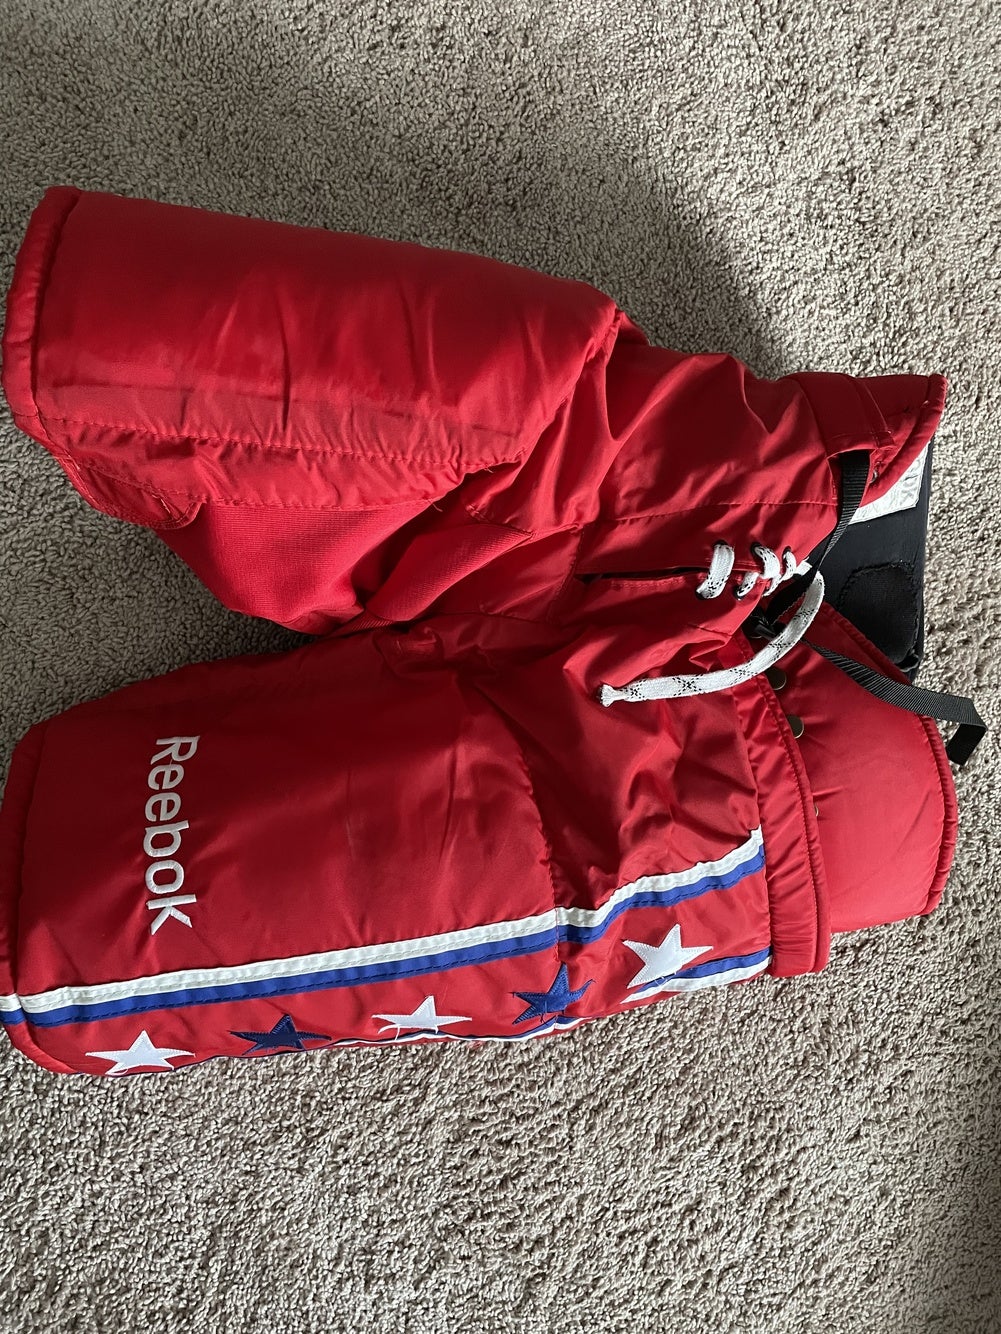 Reebok HP7000 - NHL Pro Stock Hockey Pant (Red) – HockeyStickMan